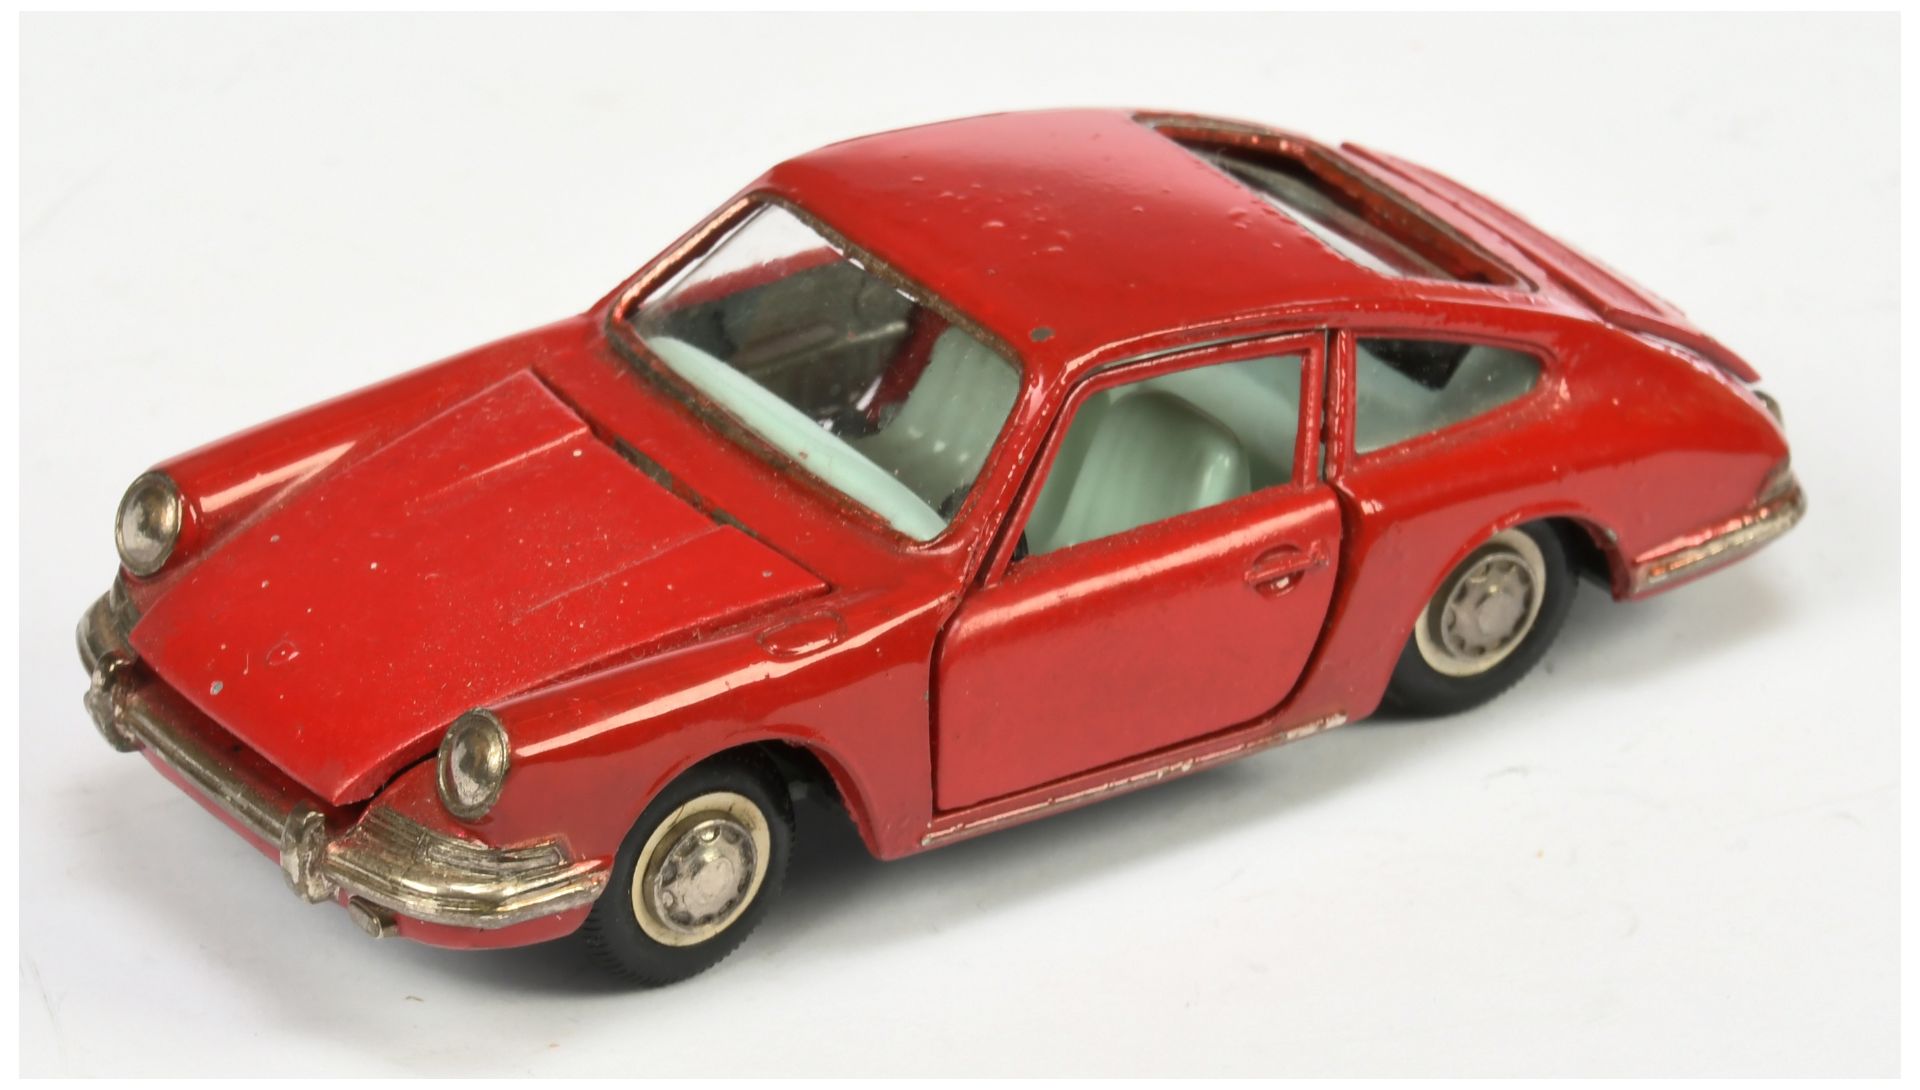 Diapet D149 Porsche 911 - Red body, pale blue interior, chrome trim - overall condition is Good S...